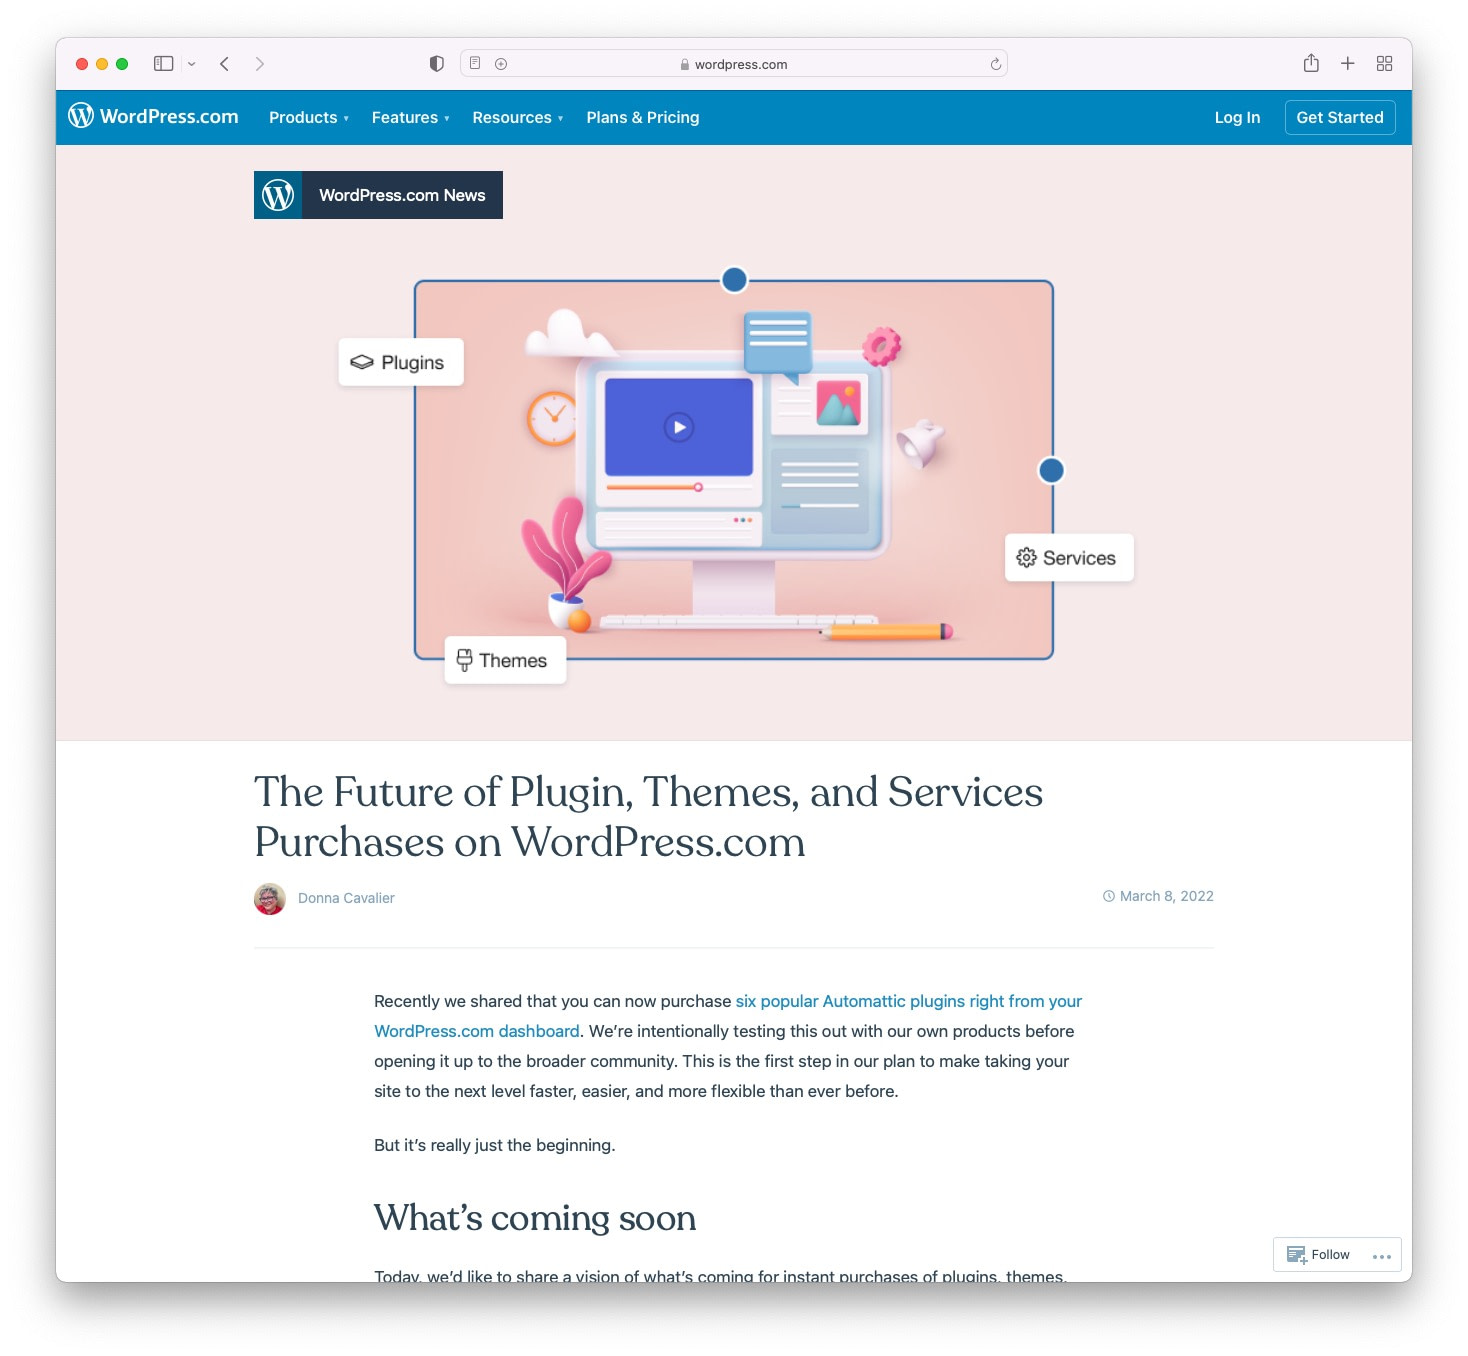 WordPress.com marketplace